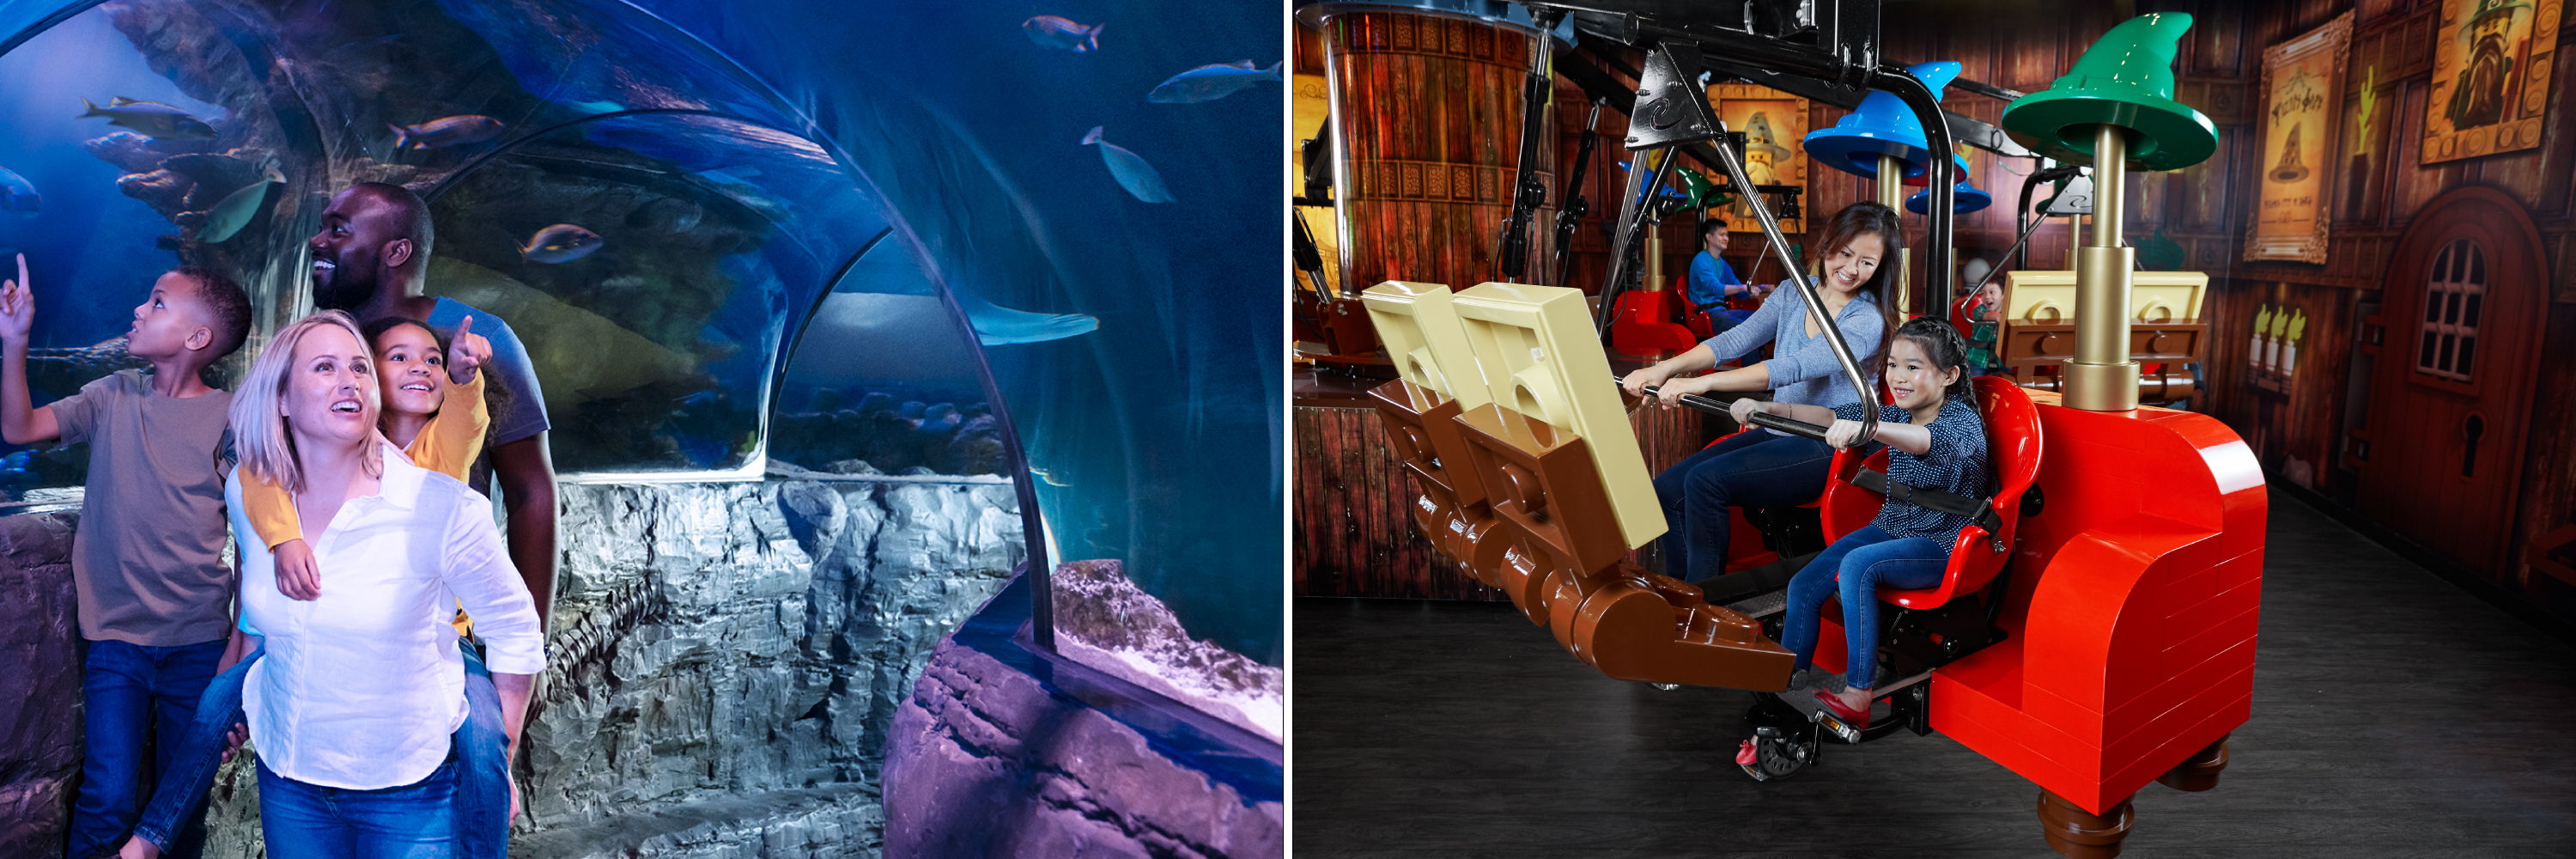 Combo Ticket and Save Money | LEGOLAND Discovery Center | SEA LIFE Aquarium